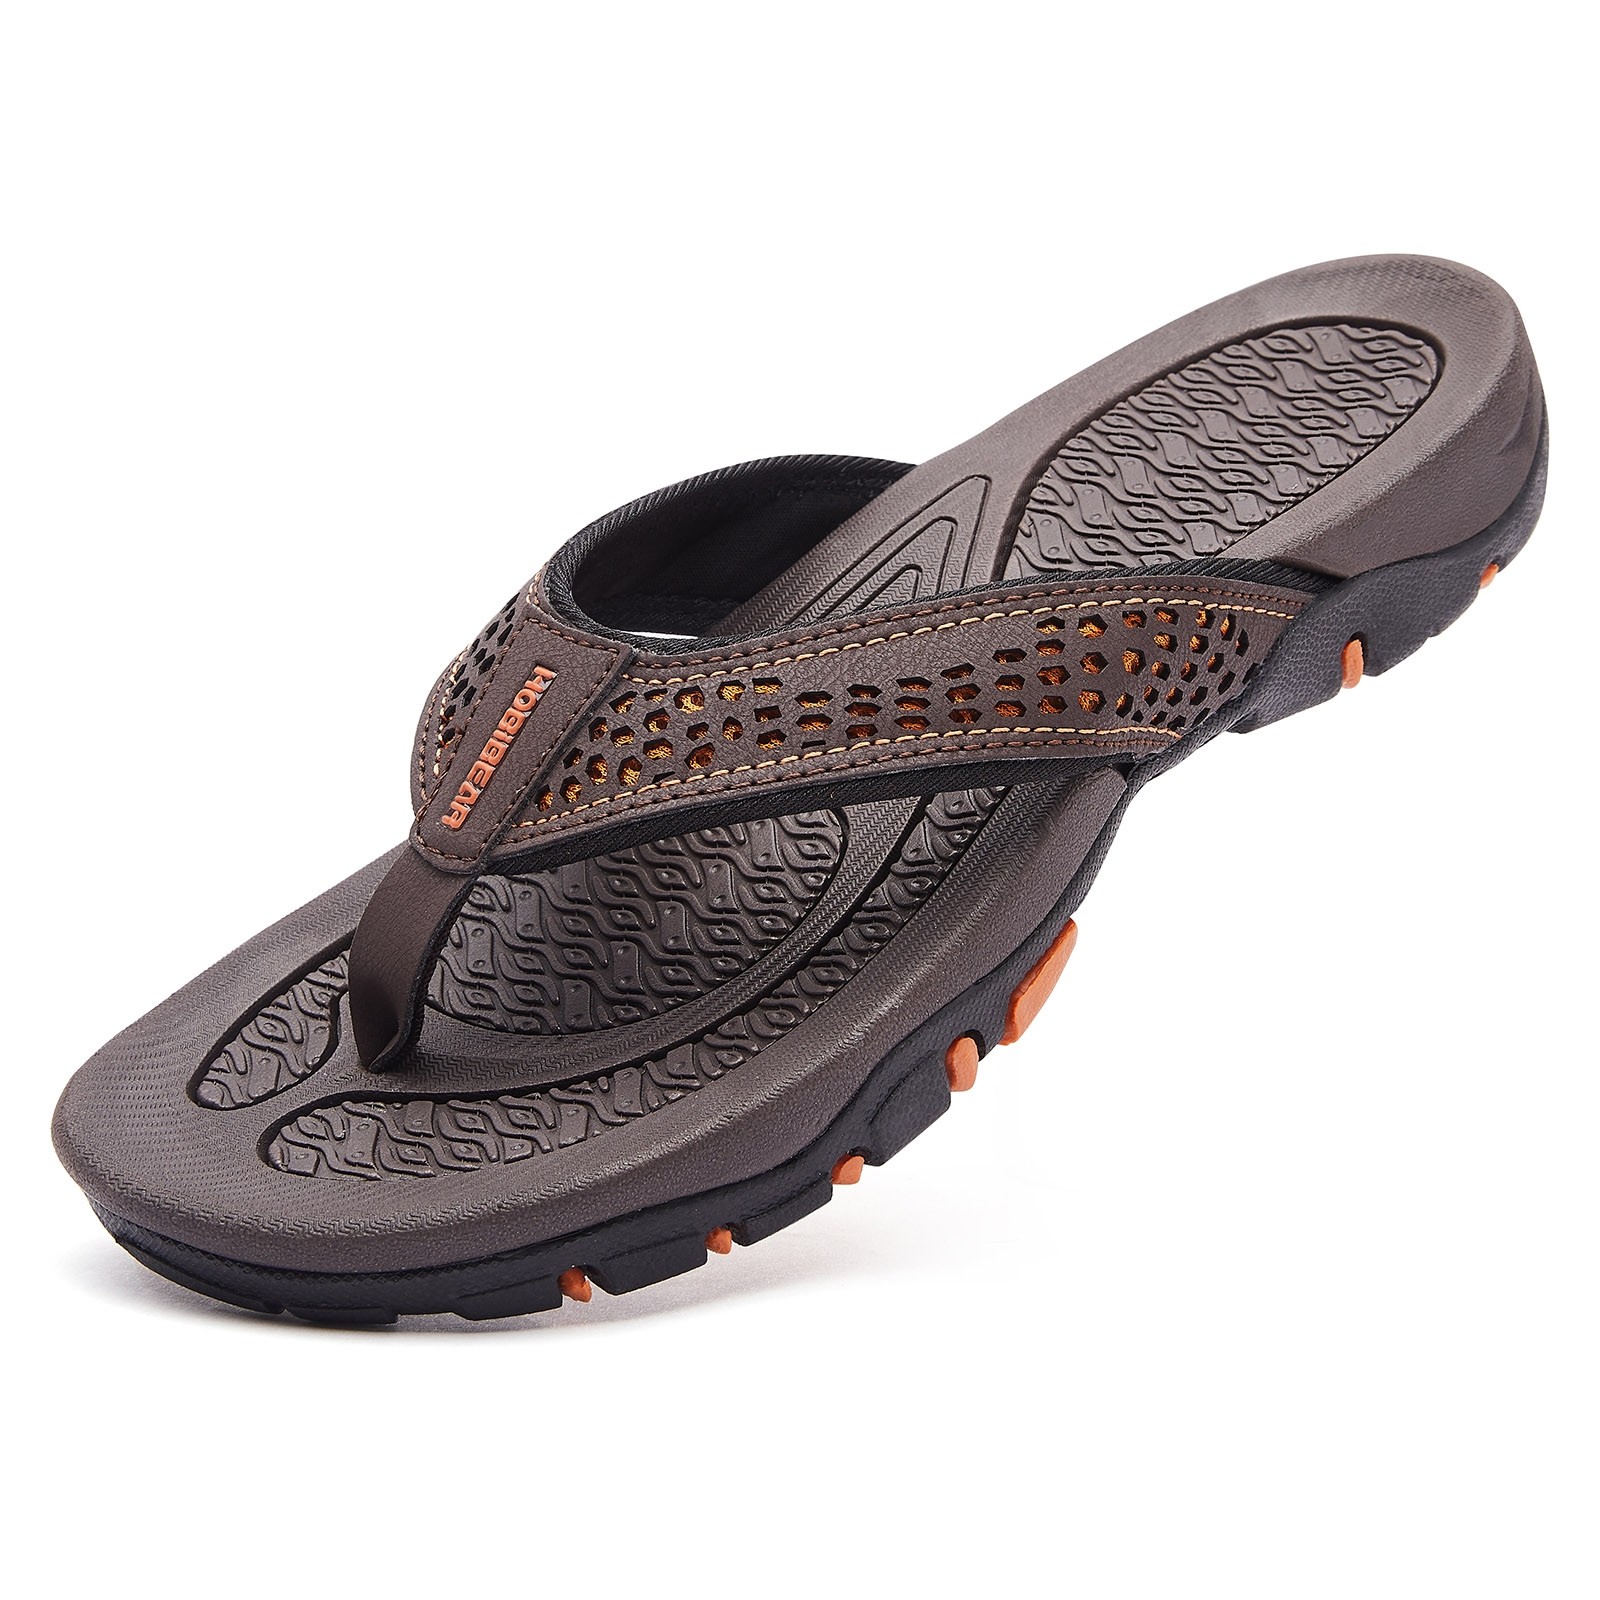 Mens Thong Sandals Indoor and Outdoor Beach Flip Flop Brown/Orange (Size 15)